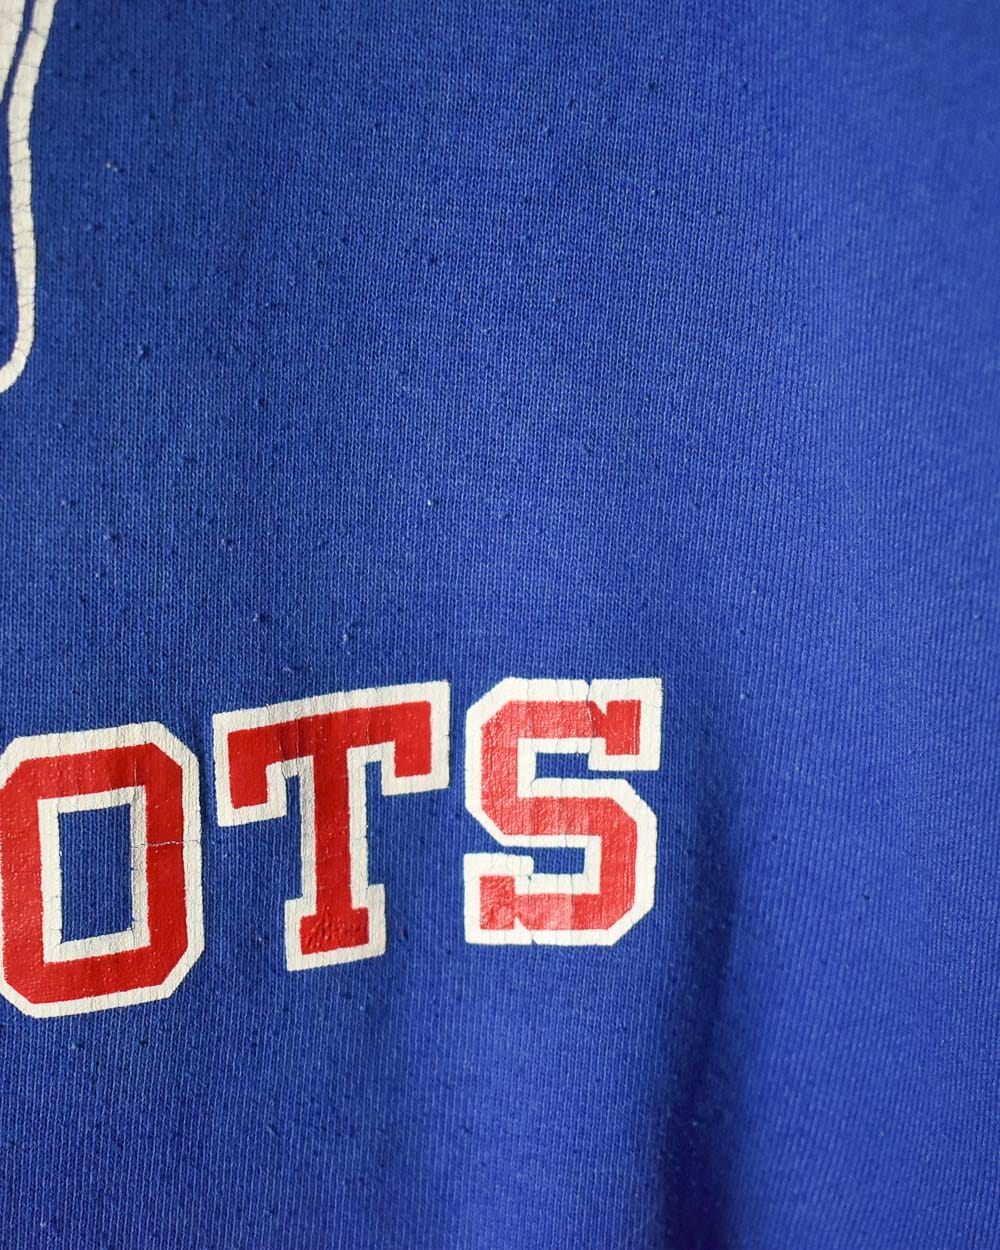 Blue Russell Athletic Peachtree Patriots Sweatshirt - Small